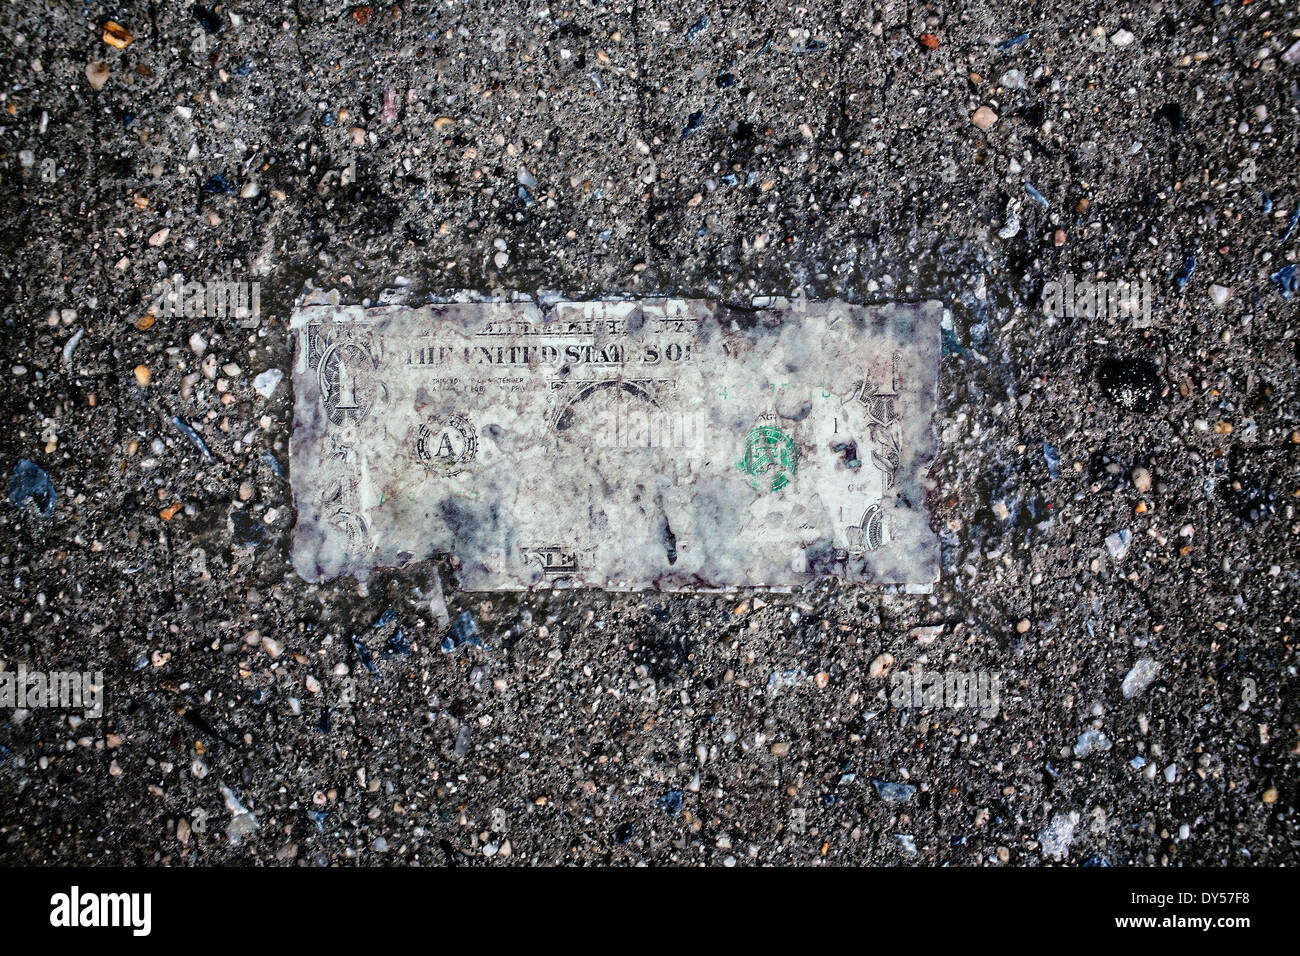 Still life of deteriorating one dollar bill on wet pavement Stock Photo